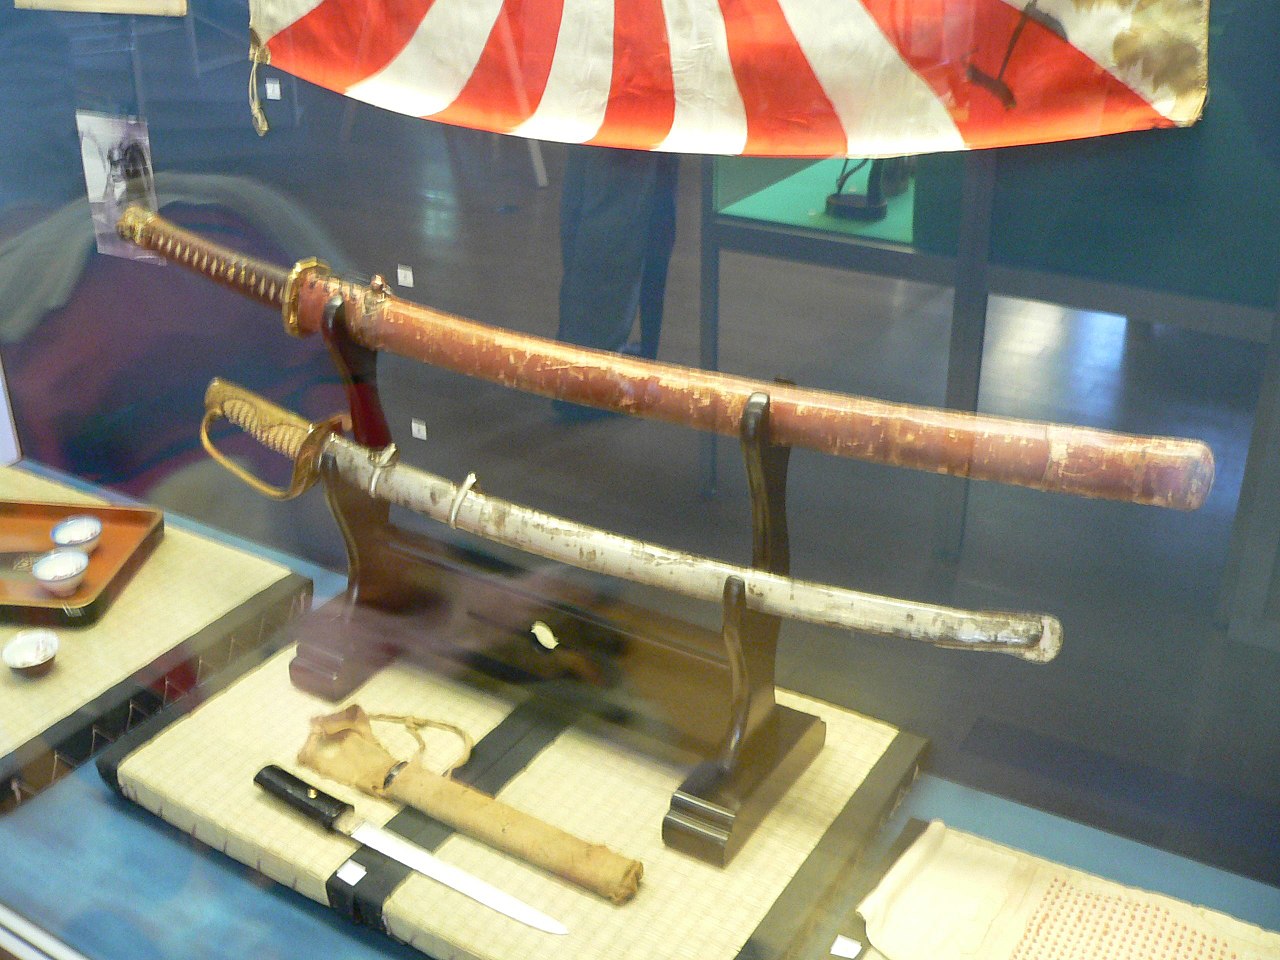 How the End of Japan's Samurai Era Affected Its Swords